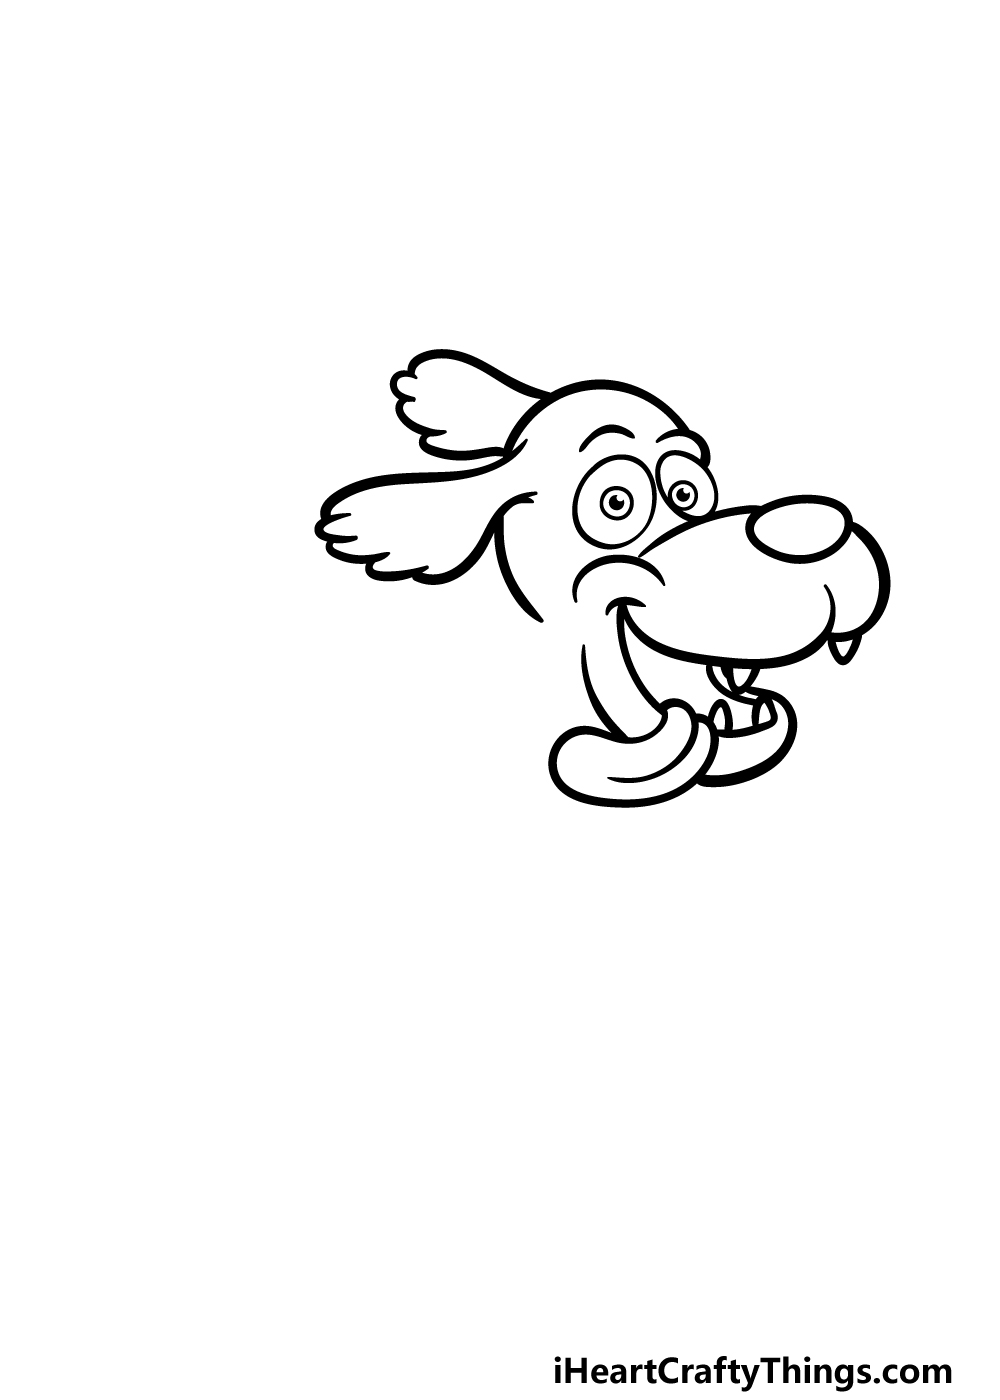 how to draw a cartoon dog step 1